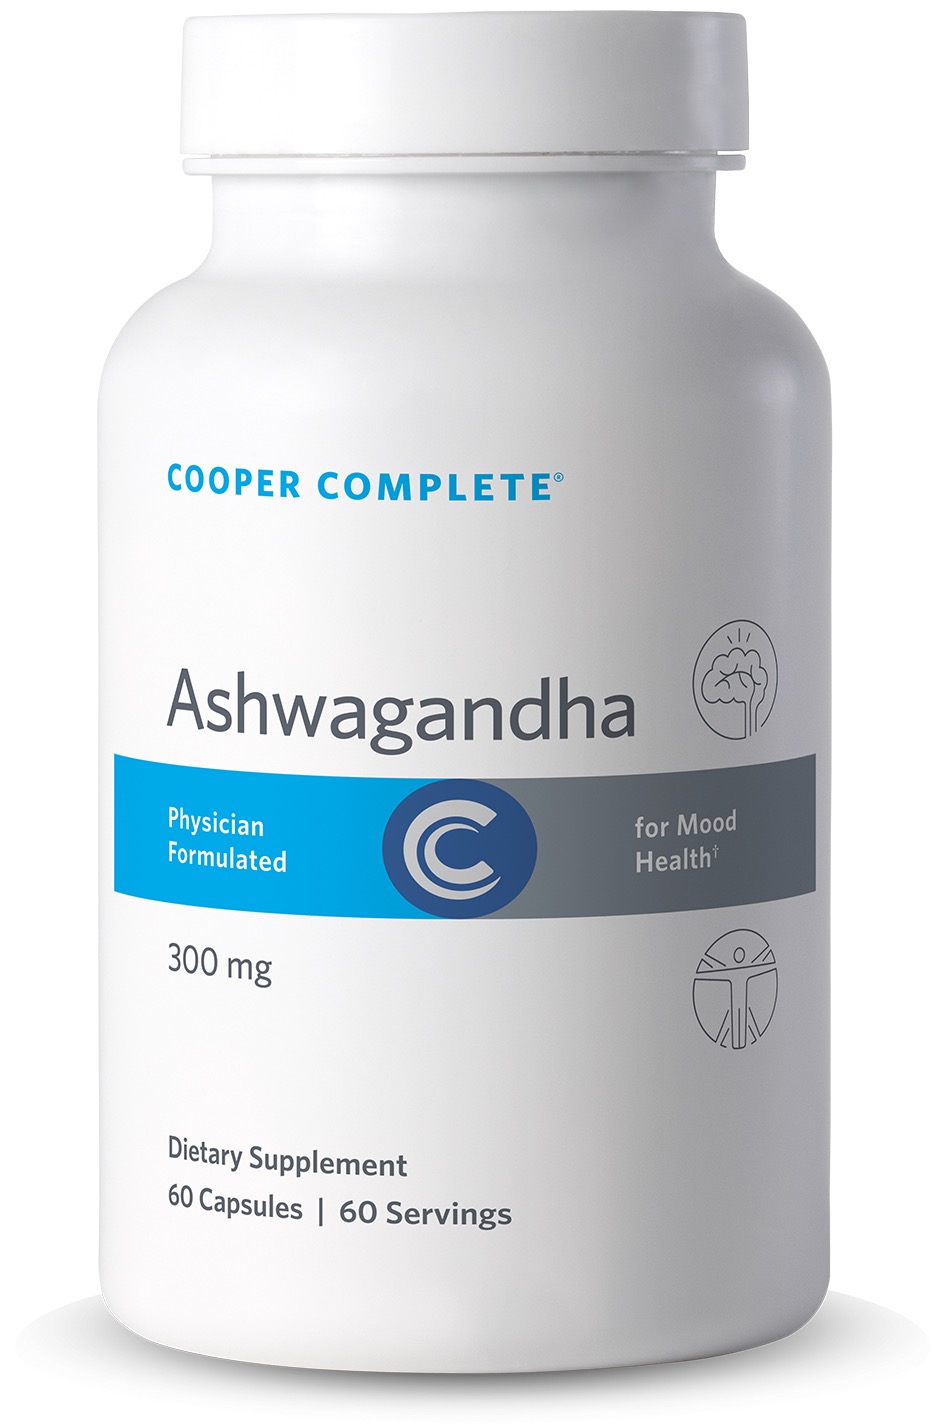 Photo of Cooper Complete Ashwagandha Supplement bottle.